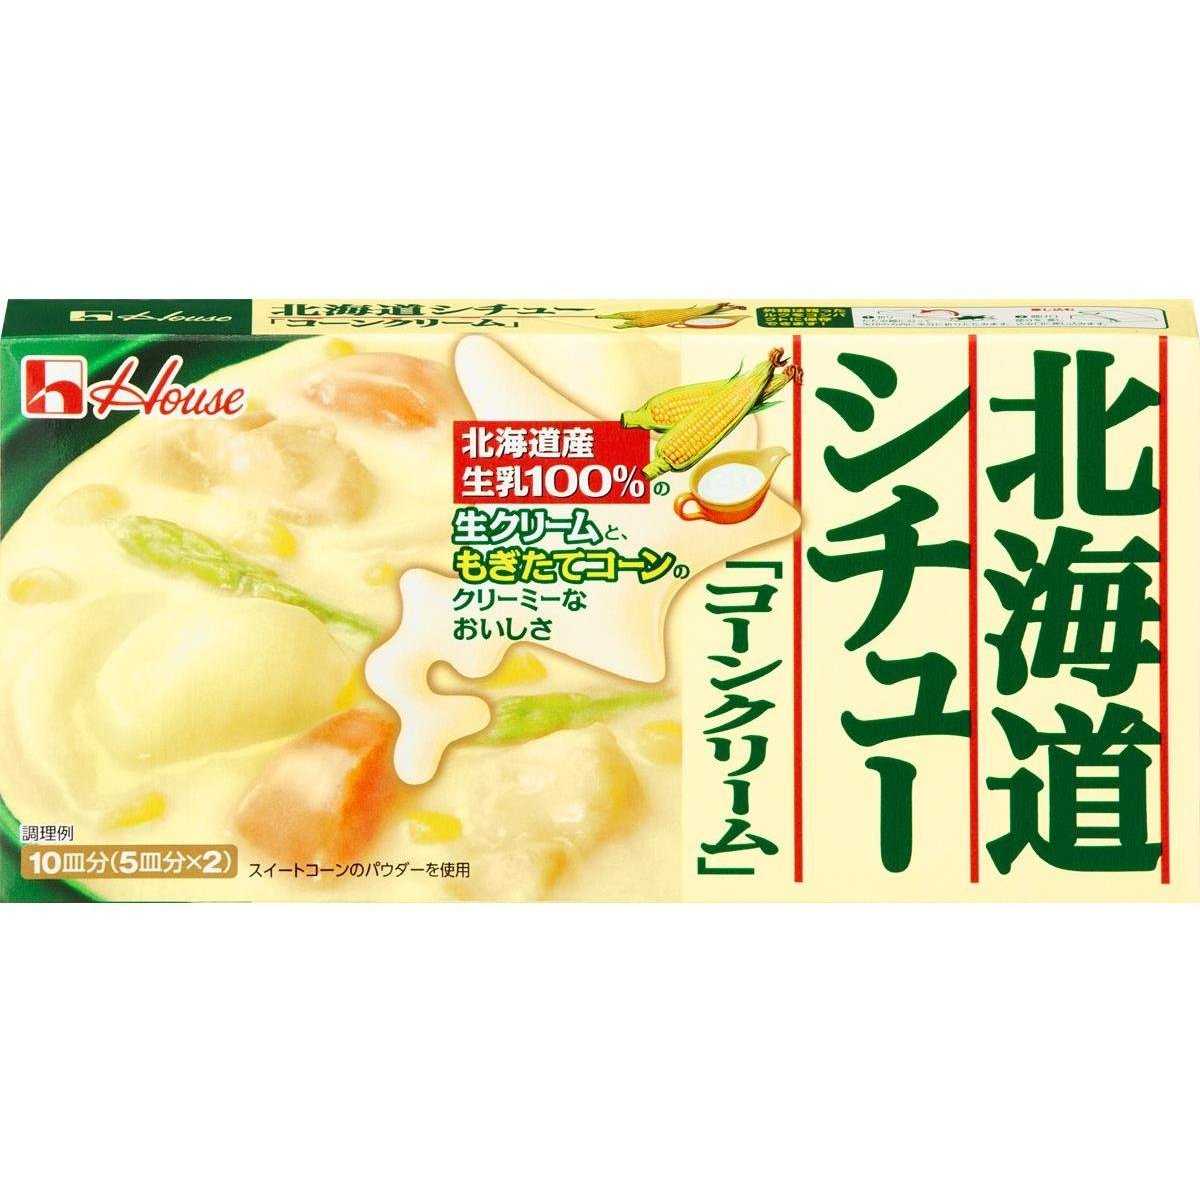 House Hokkaido stew cone cream